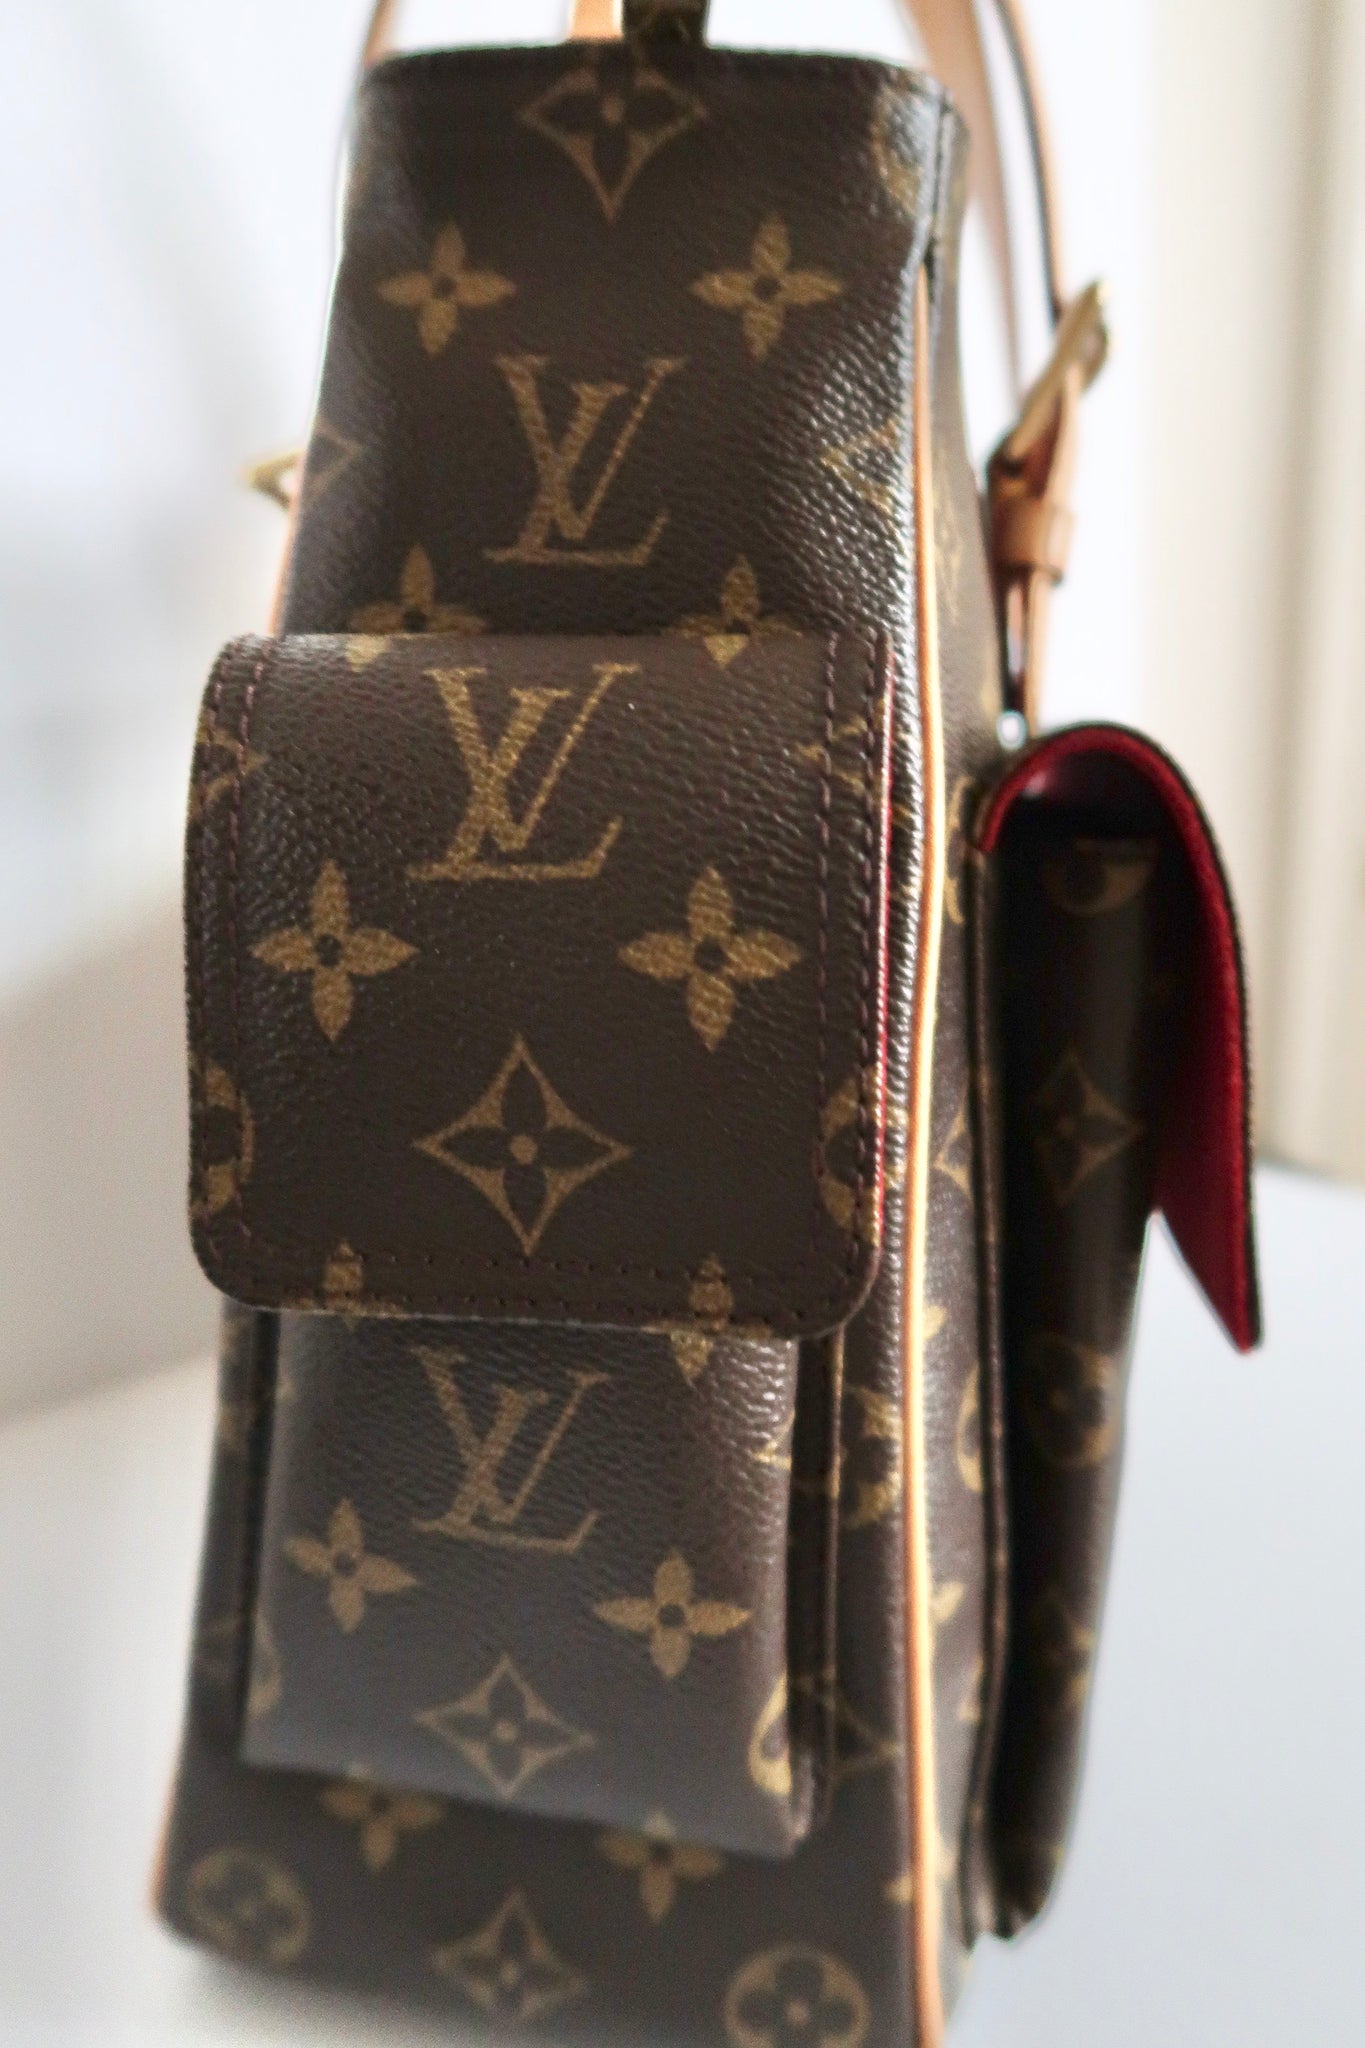 Louis Vuitton multipli cite unboxing 